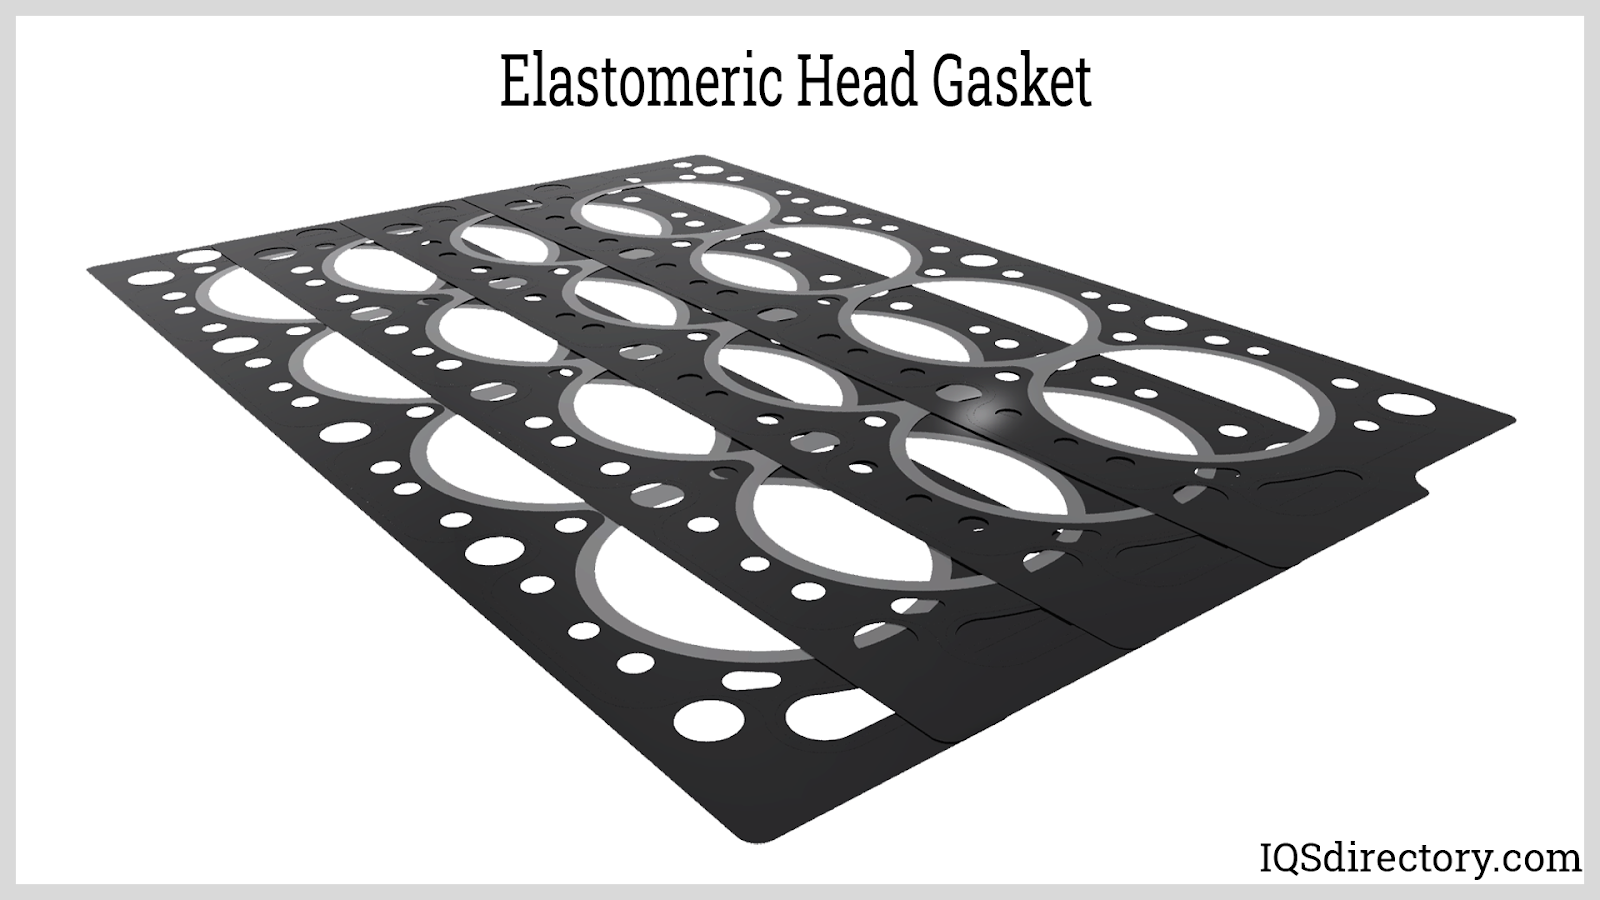 Elastomeric Head Gasket